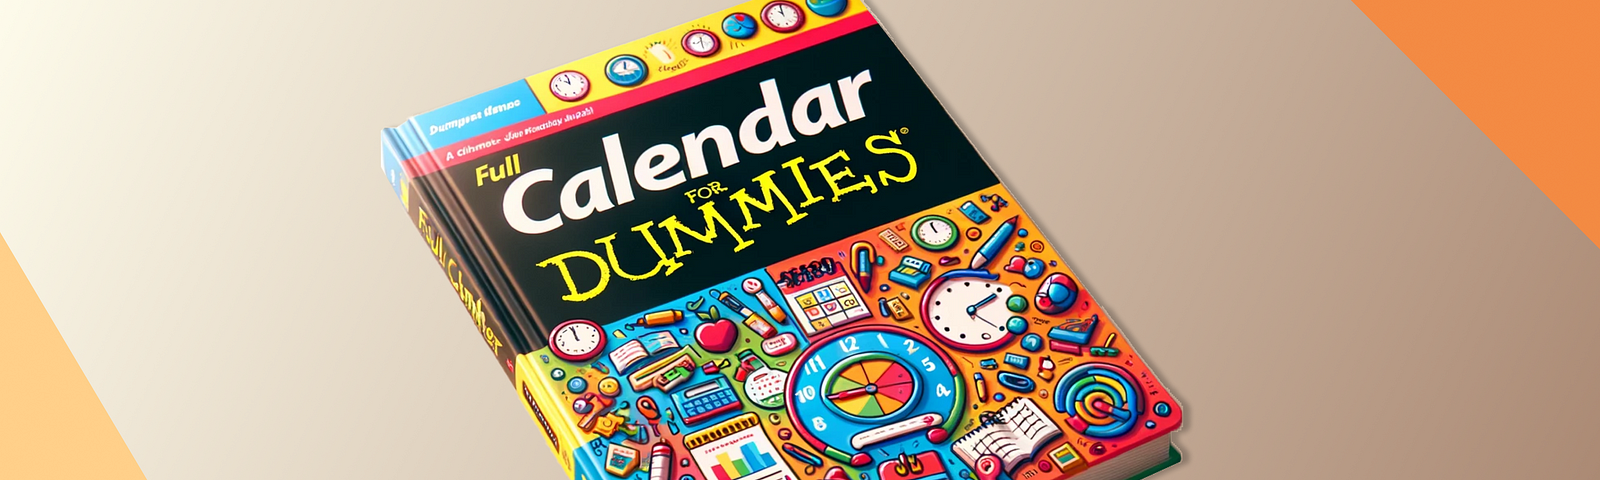 Full Calendar for Dummies Book